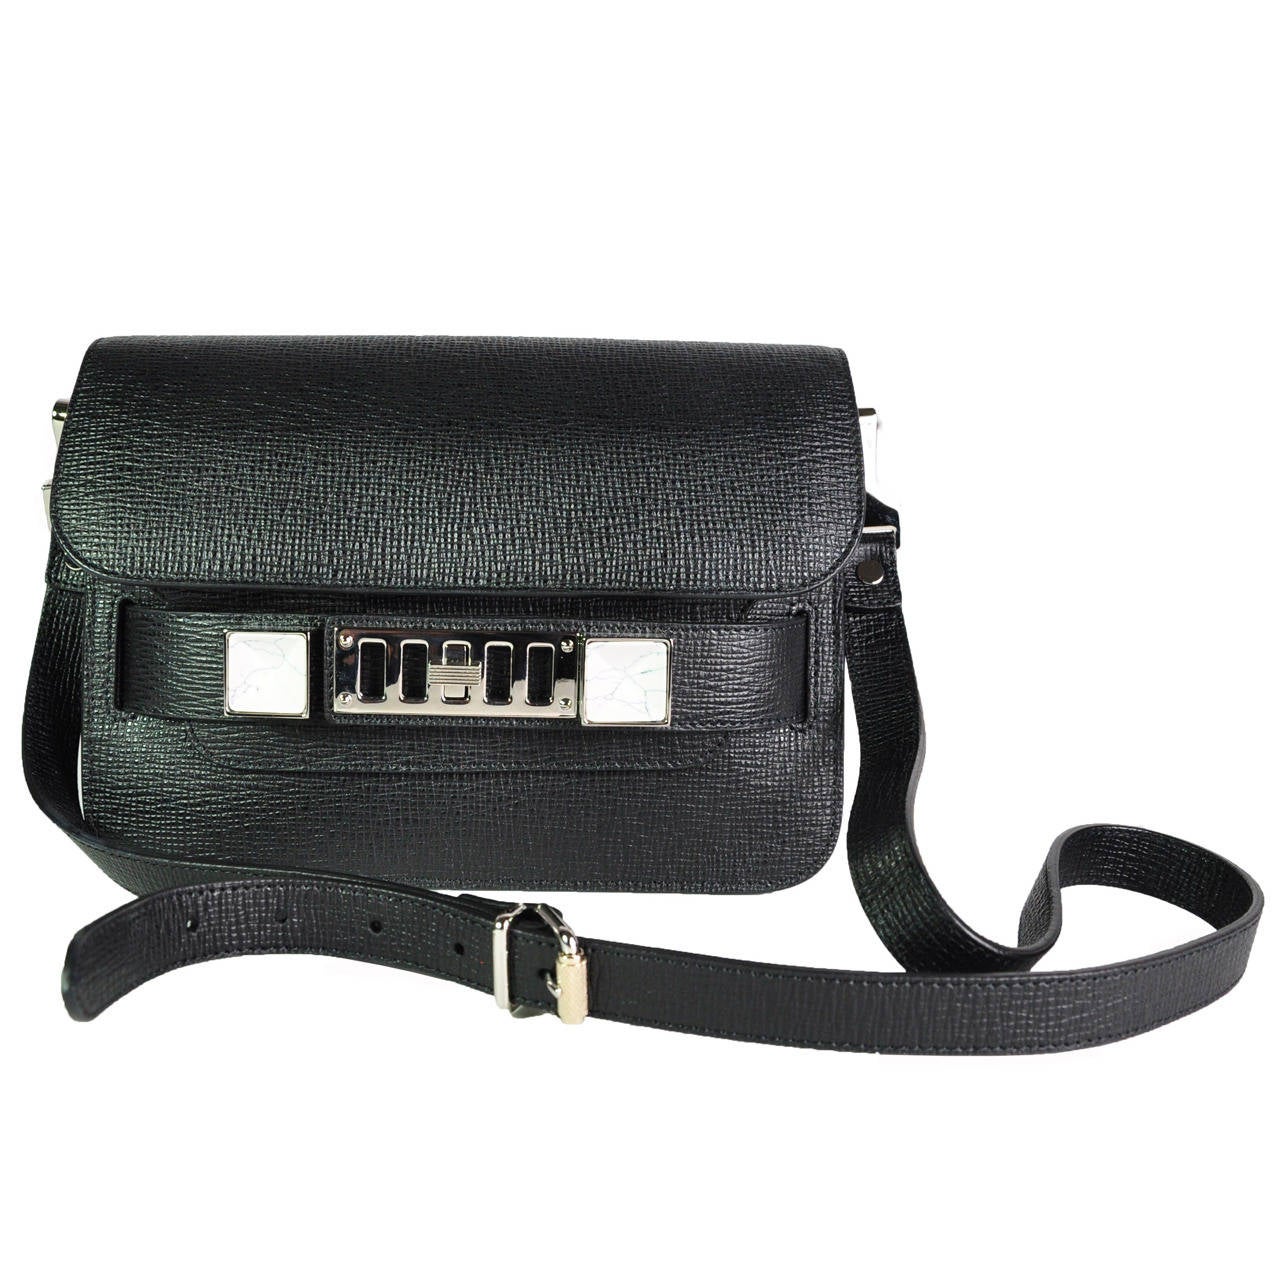 Proenza Schouler Black Textured Leather PS11 Mini Classic Shoulder Bag